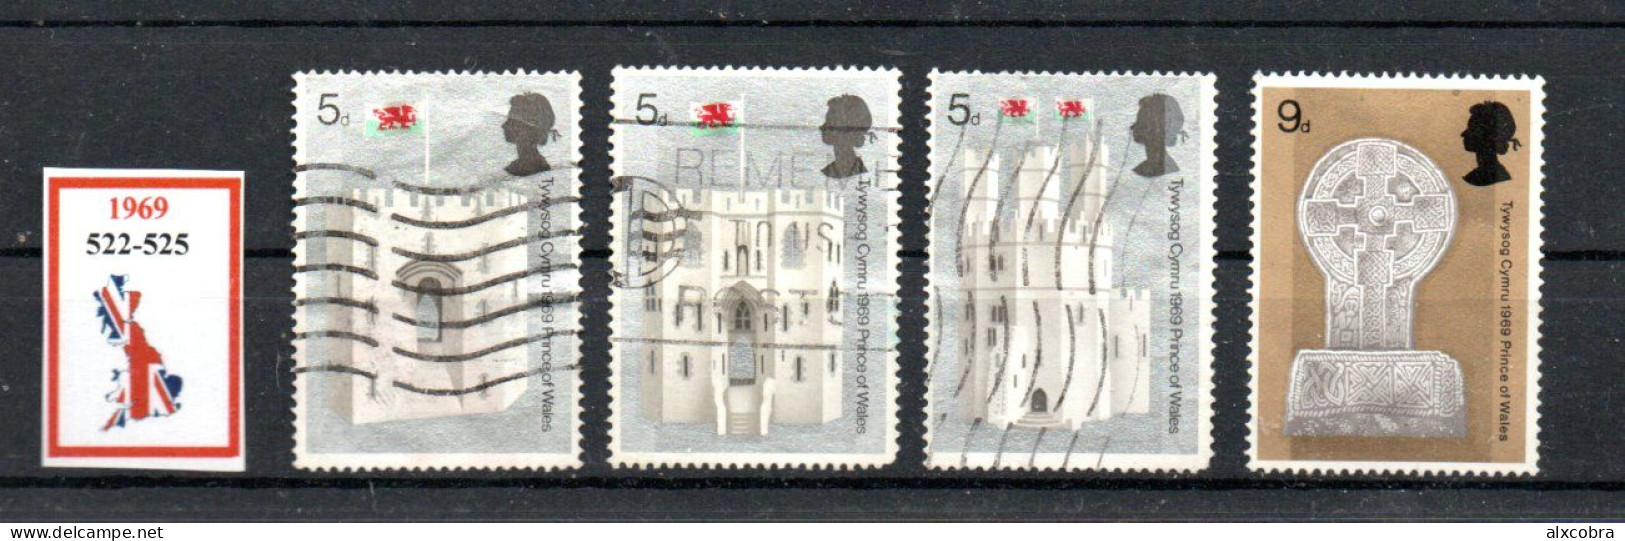 United Kingdom Castles 1969 Michel 522-525 3used 1MNH - Oblitérés